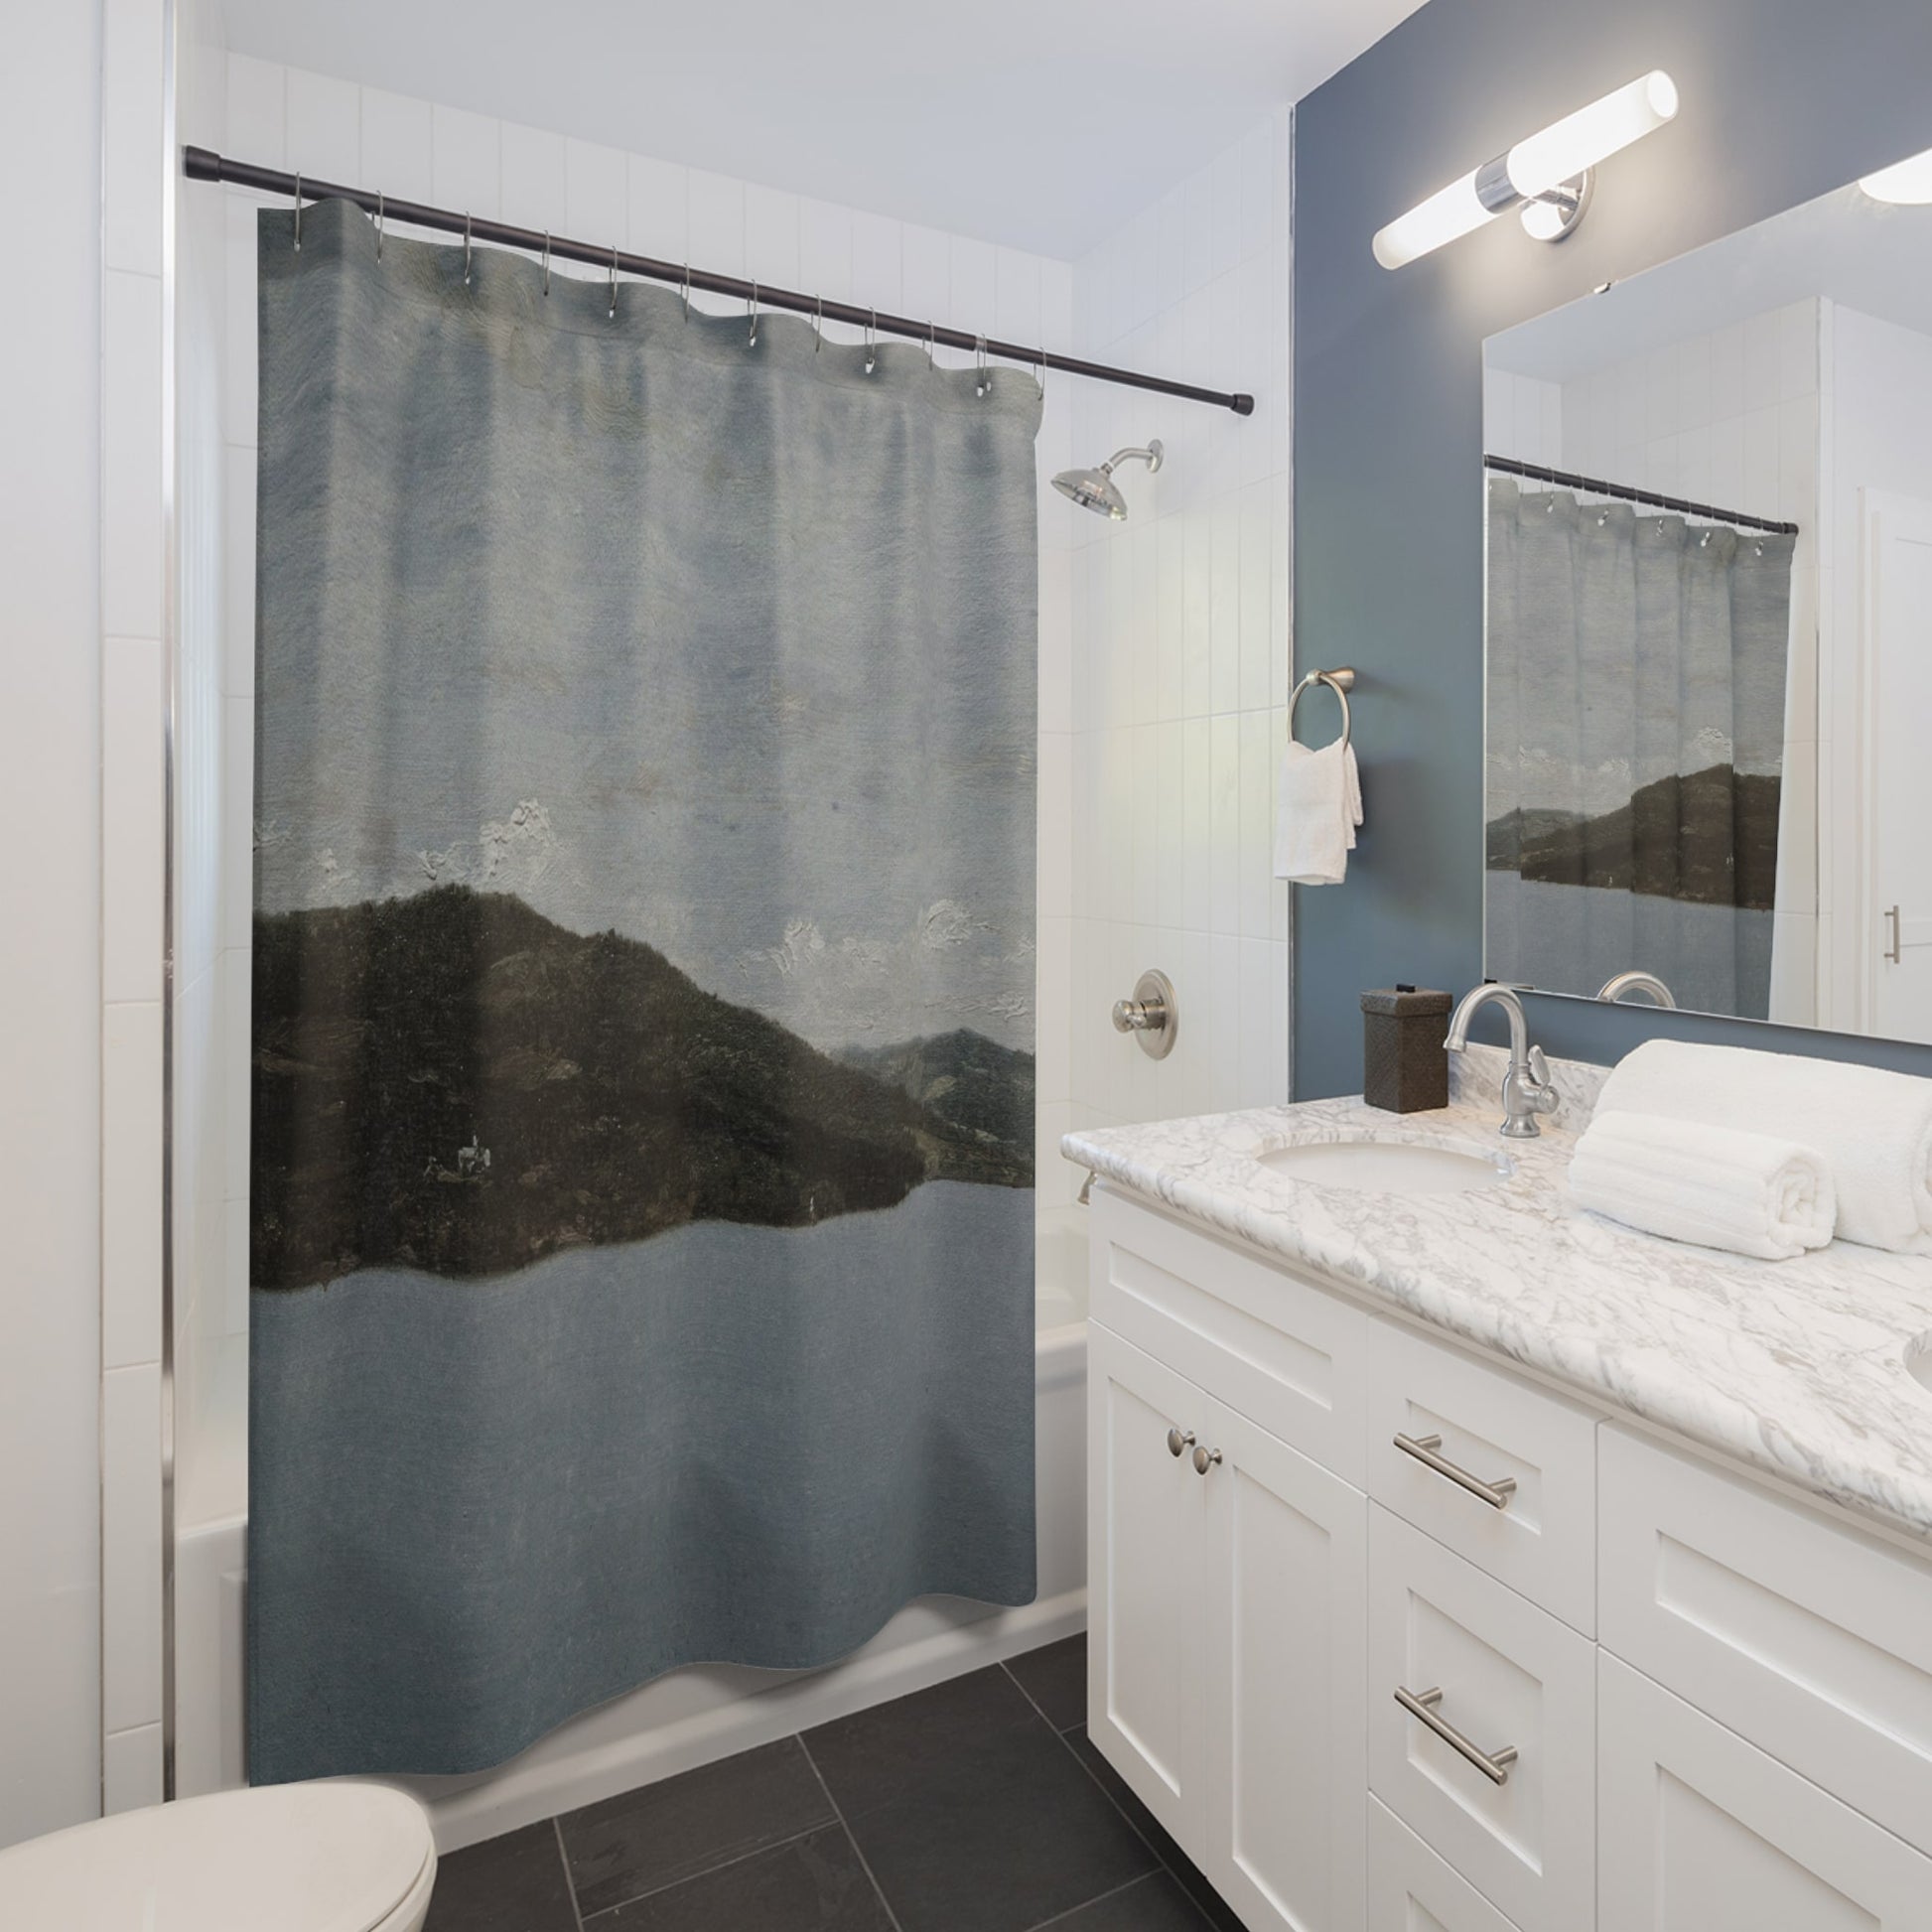 Minimalist Landscape Shower Curtain Best Bathroom Decorating Ideas for Landscapes Decor